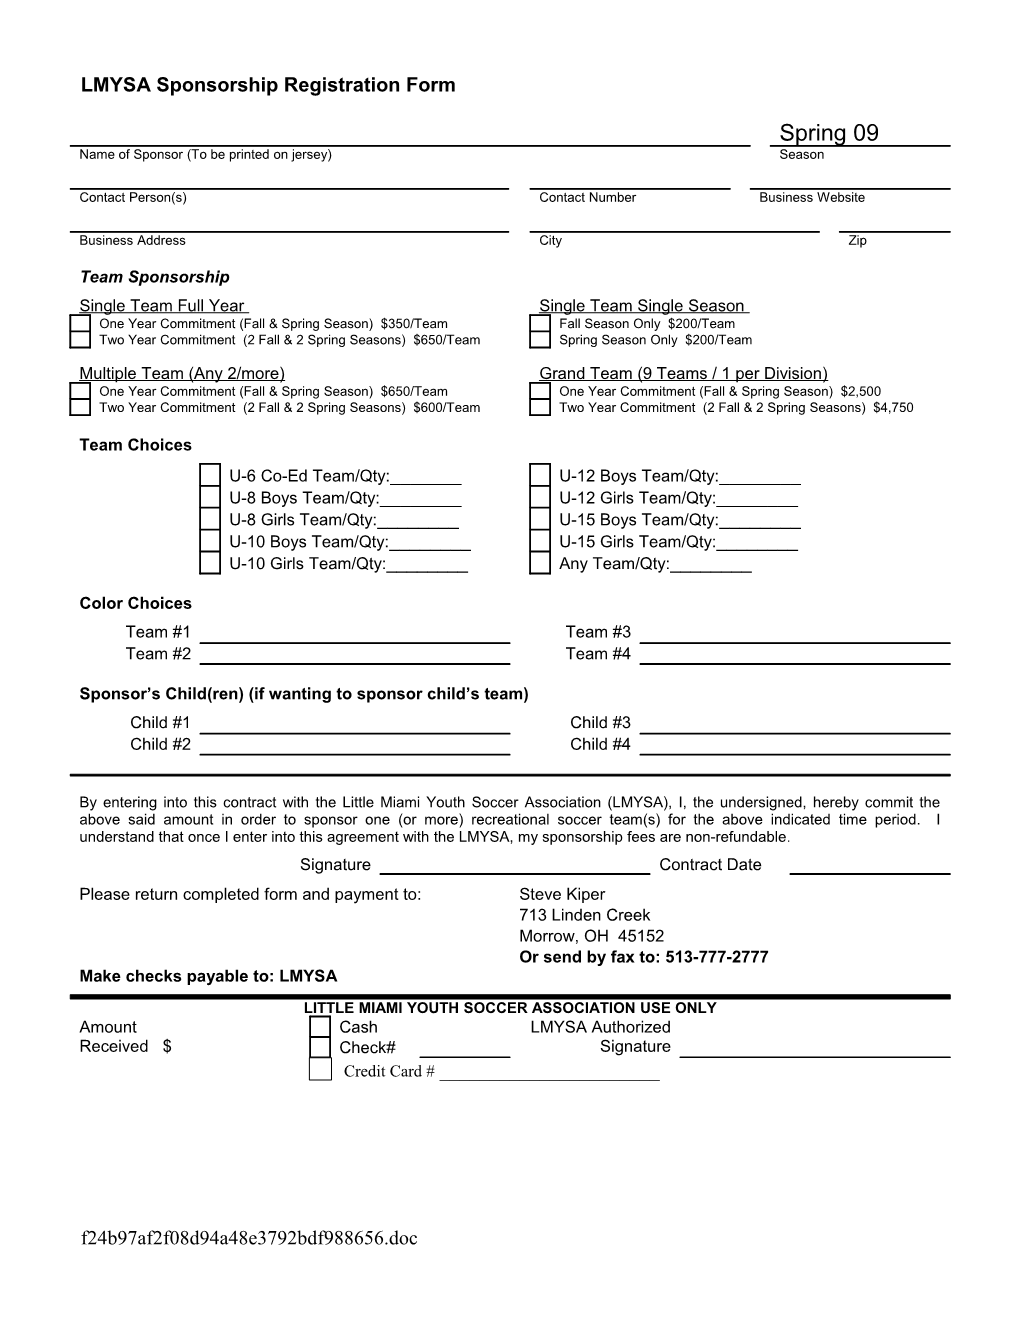 Sponsership Registration Form